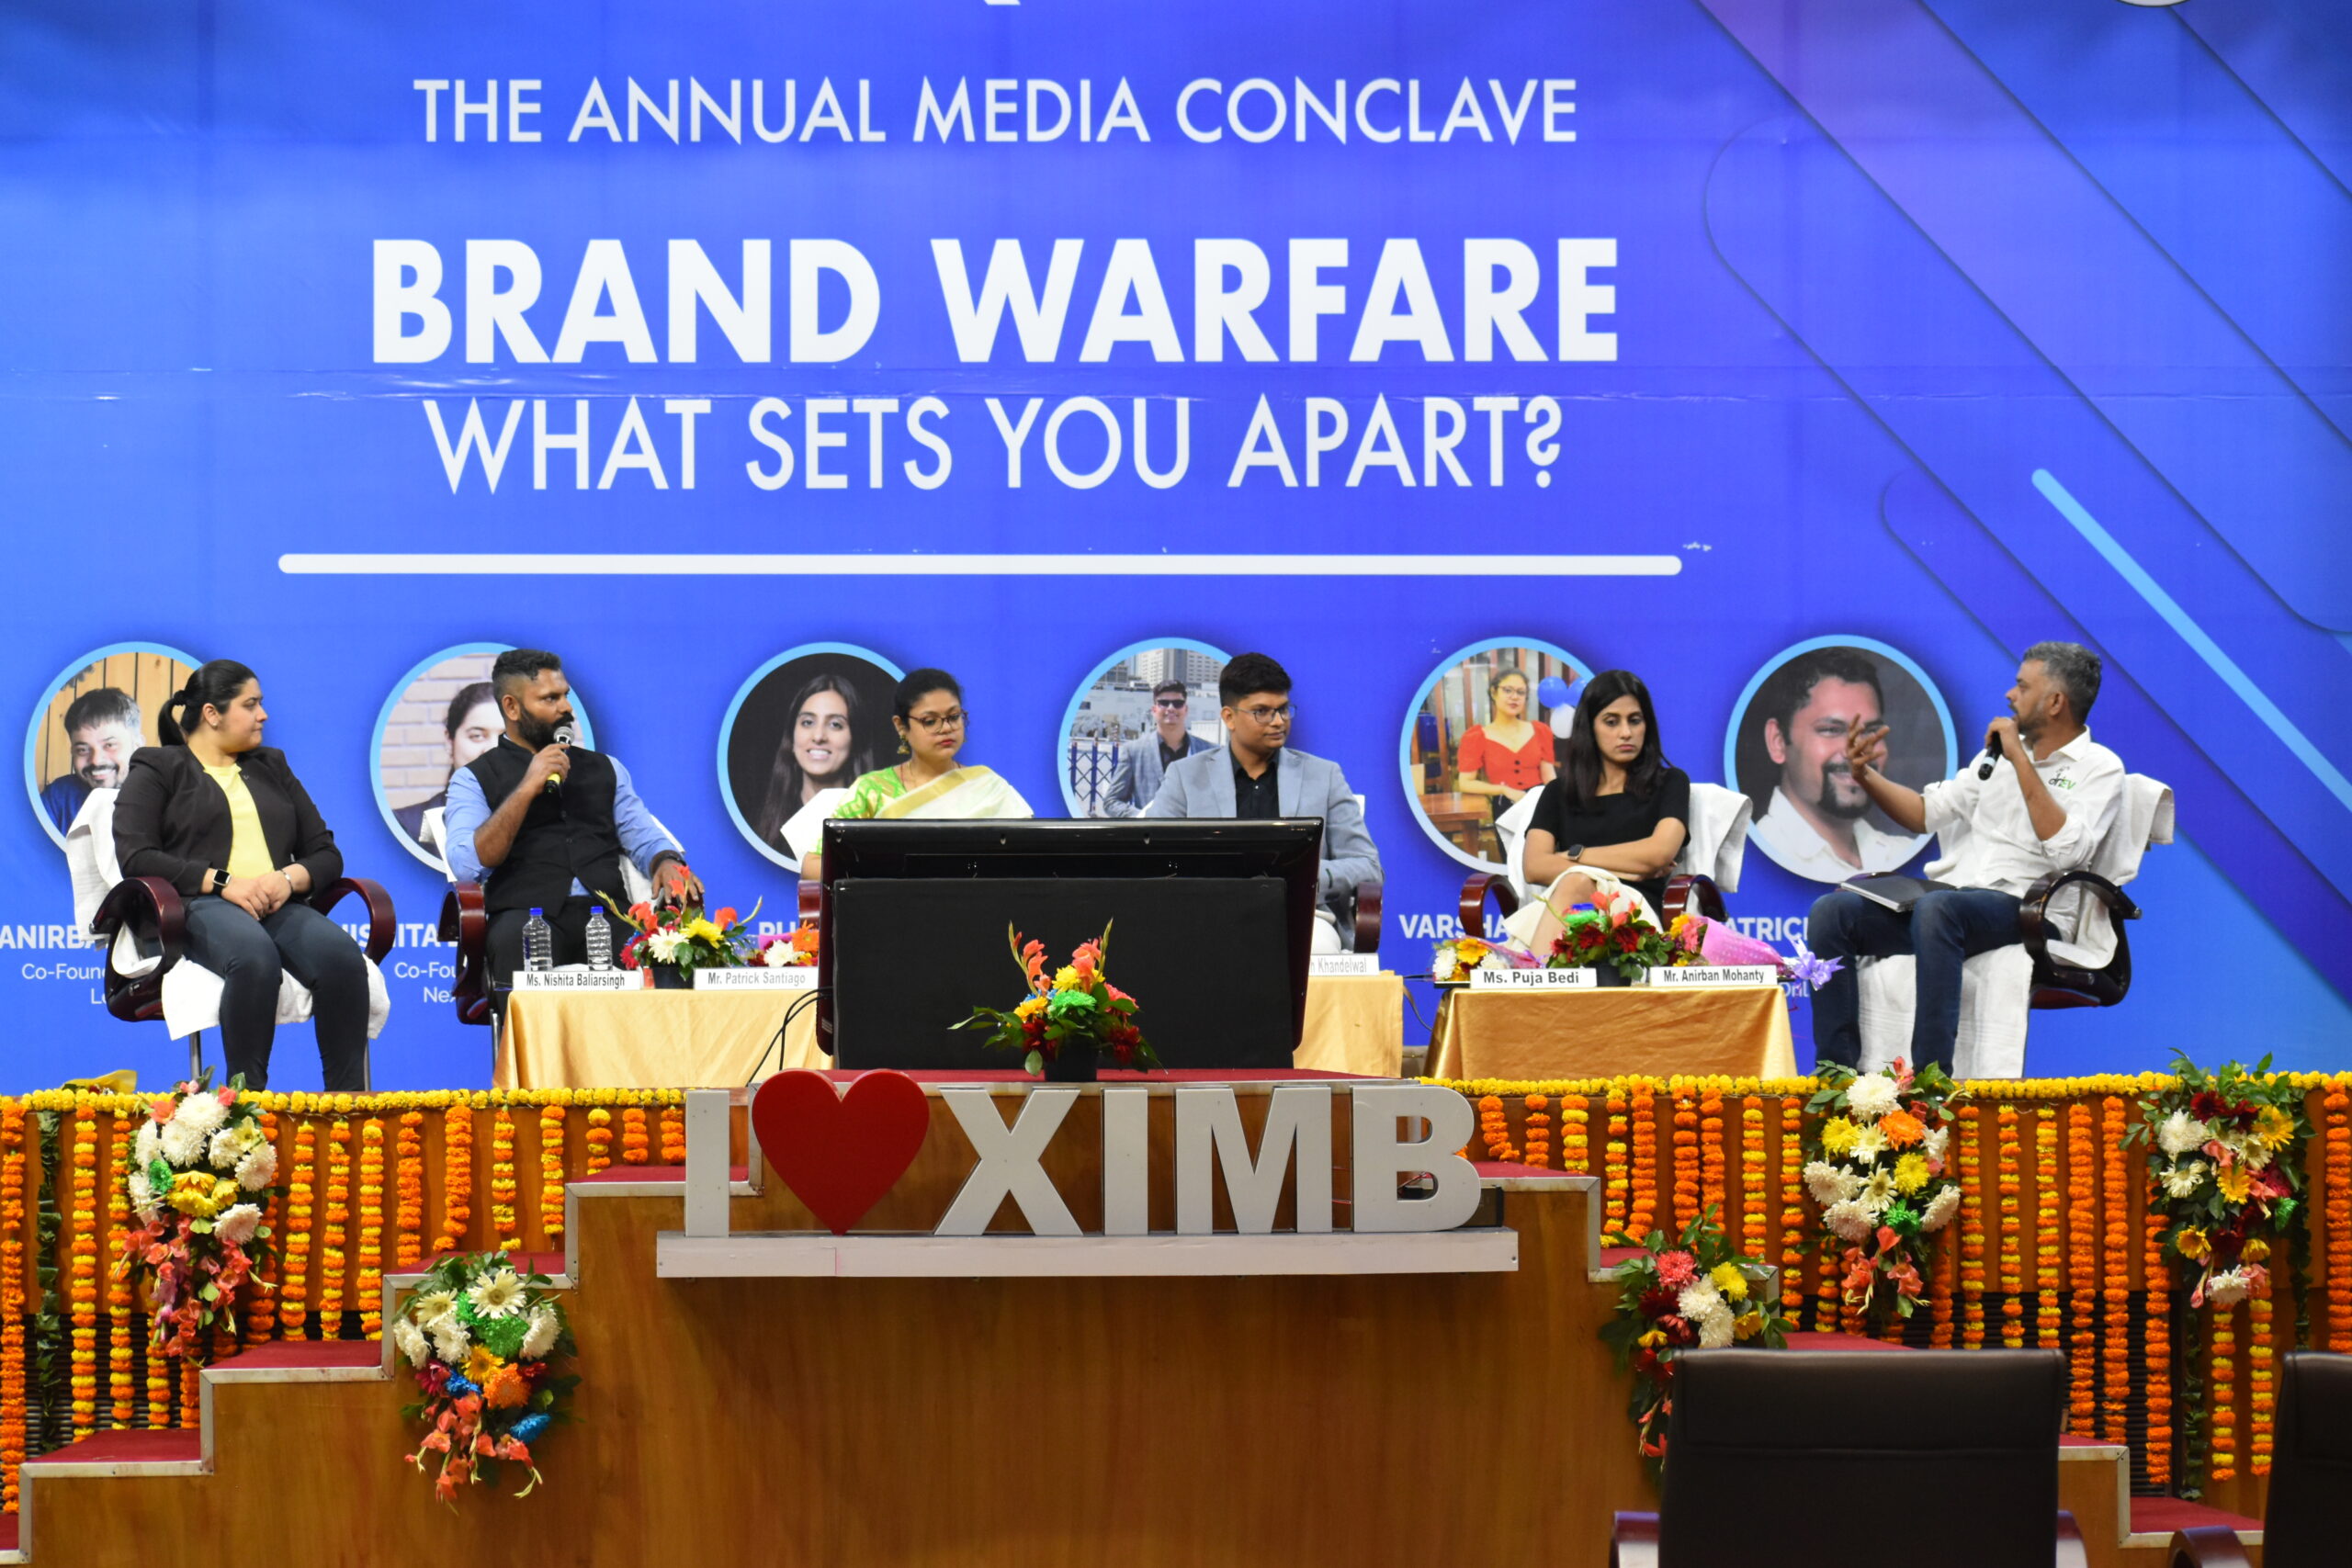 XIM hosts Annual Media Conclave